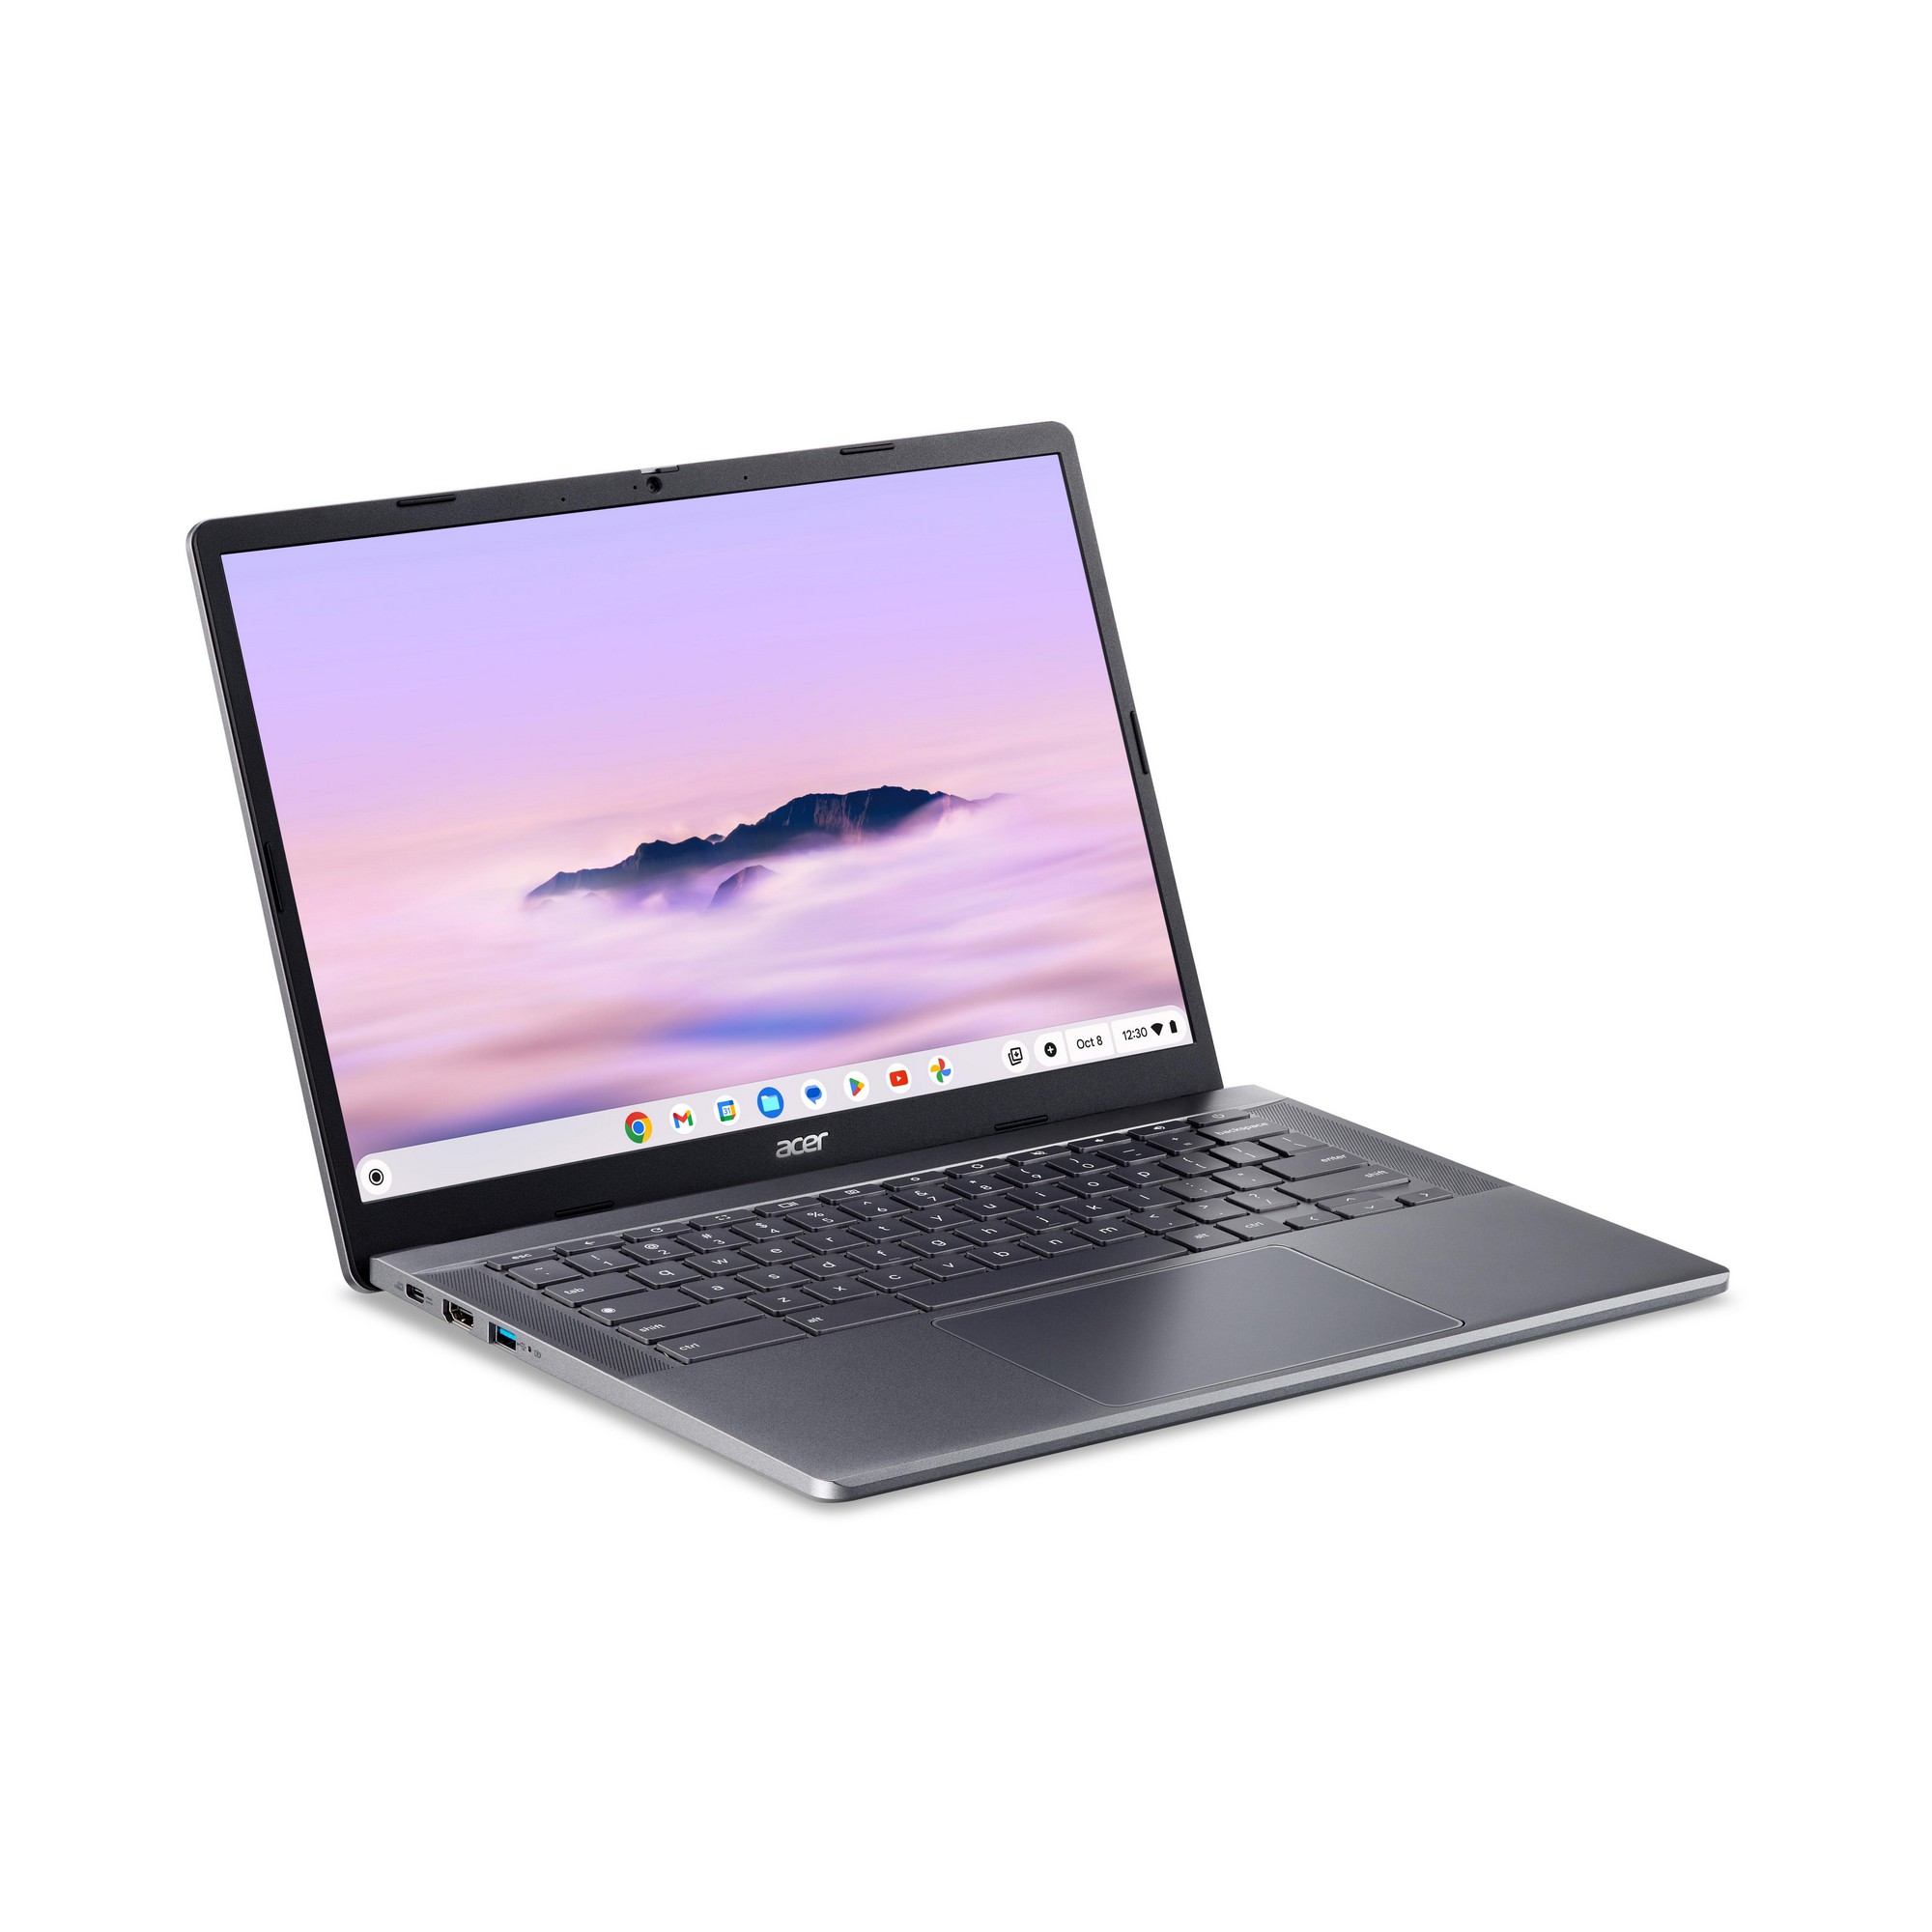 Acer launcht neue Chromebook Plus-Modelle – Hartware